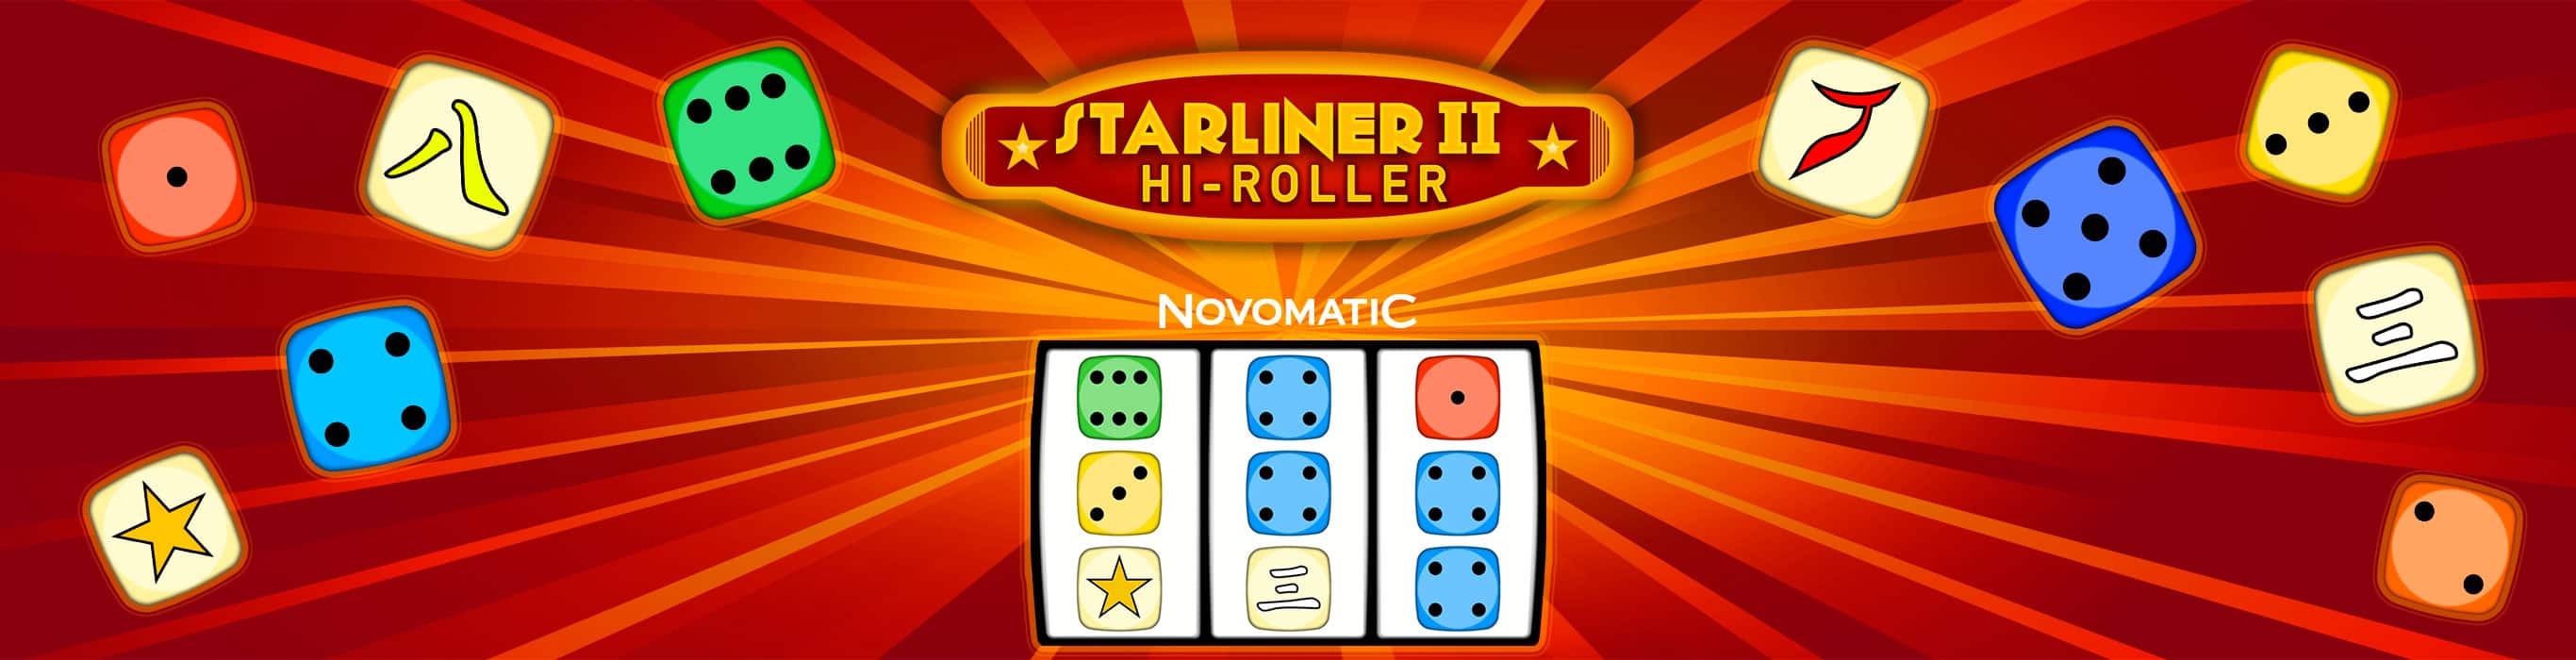 starliner2hiroller-36win-banner-2732x700